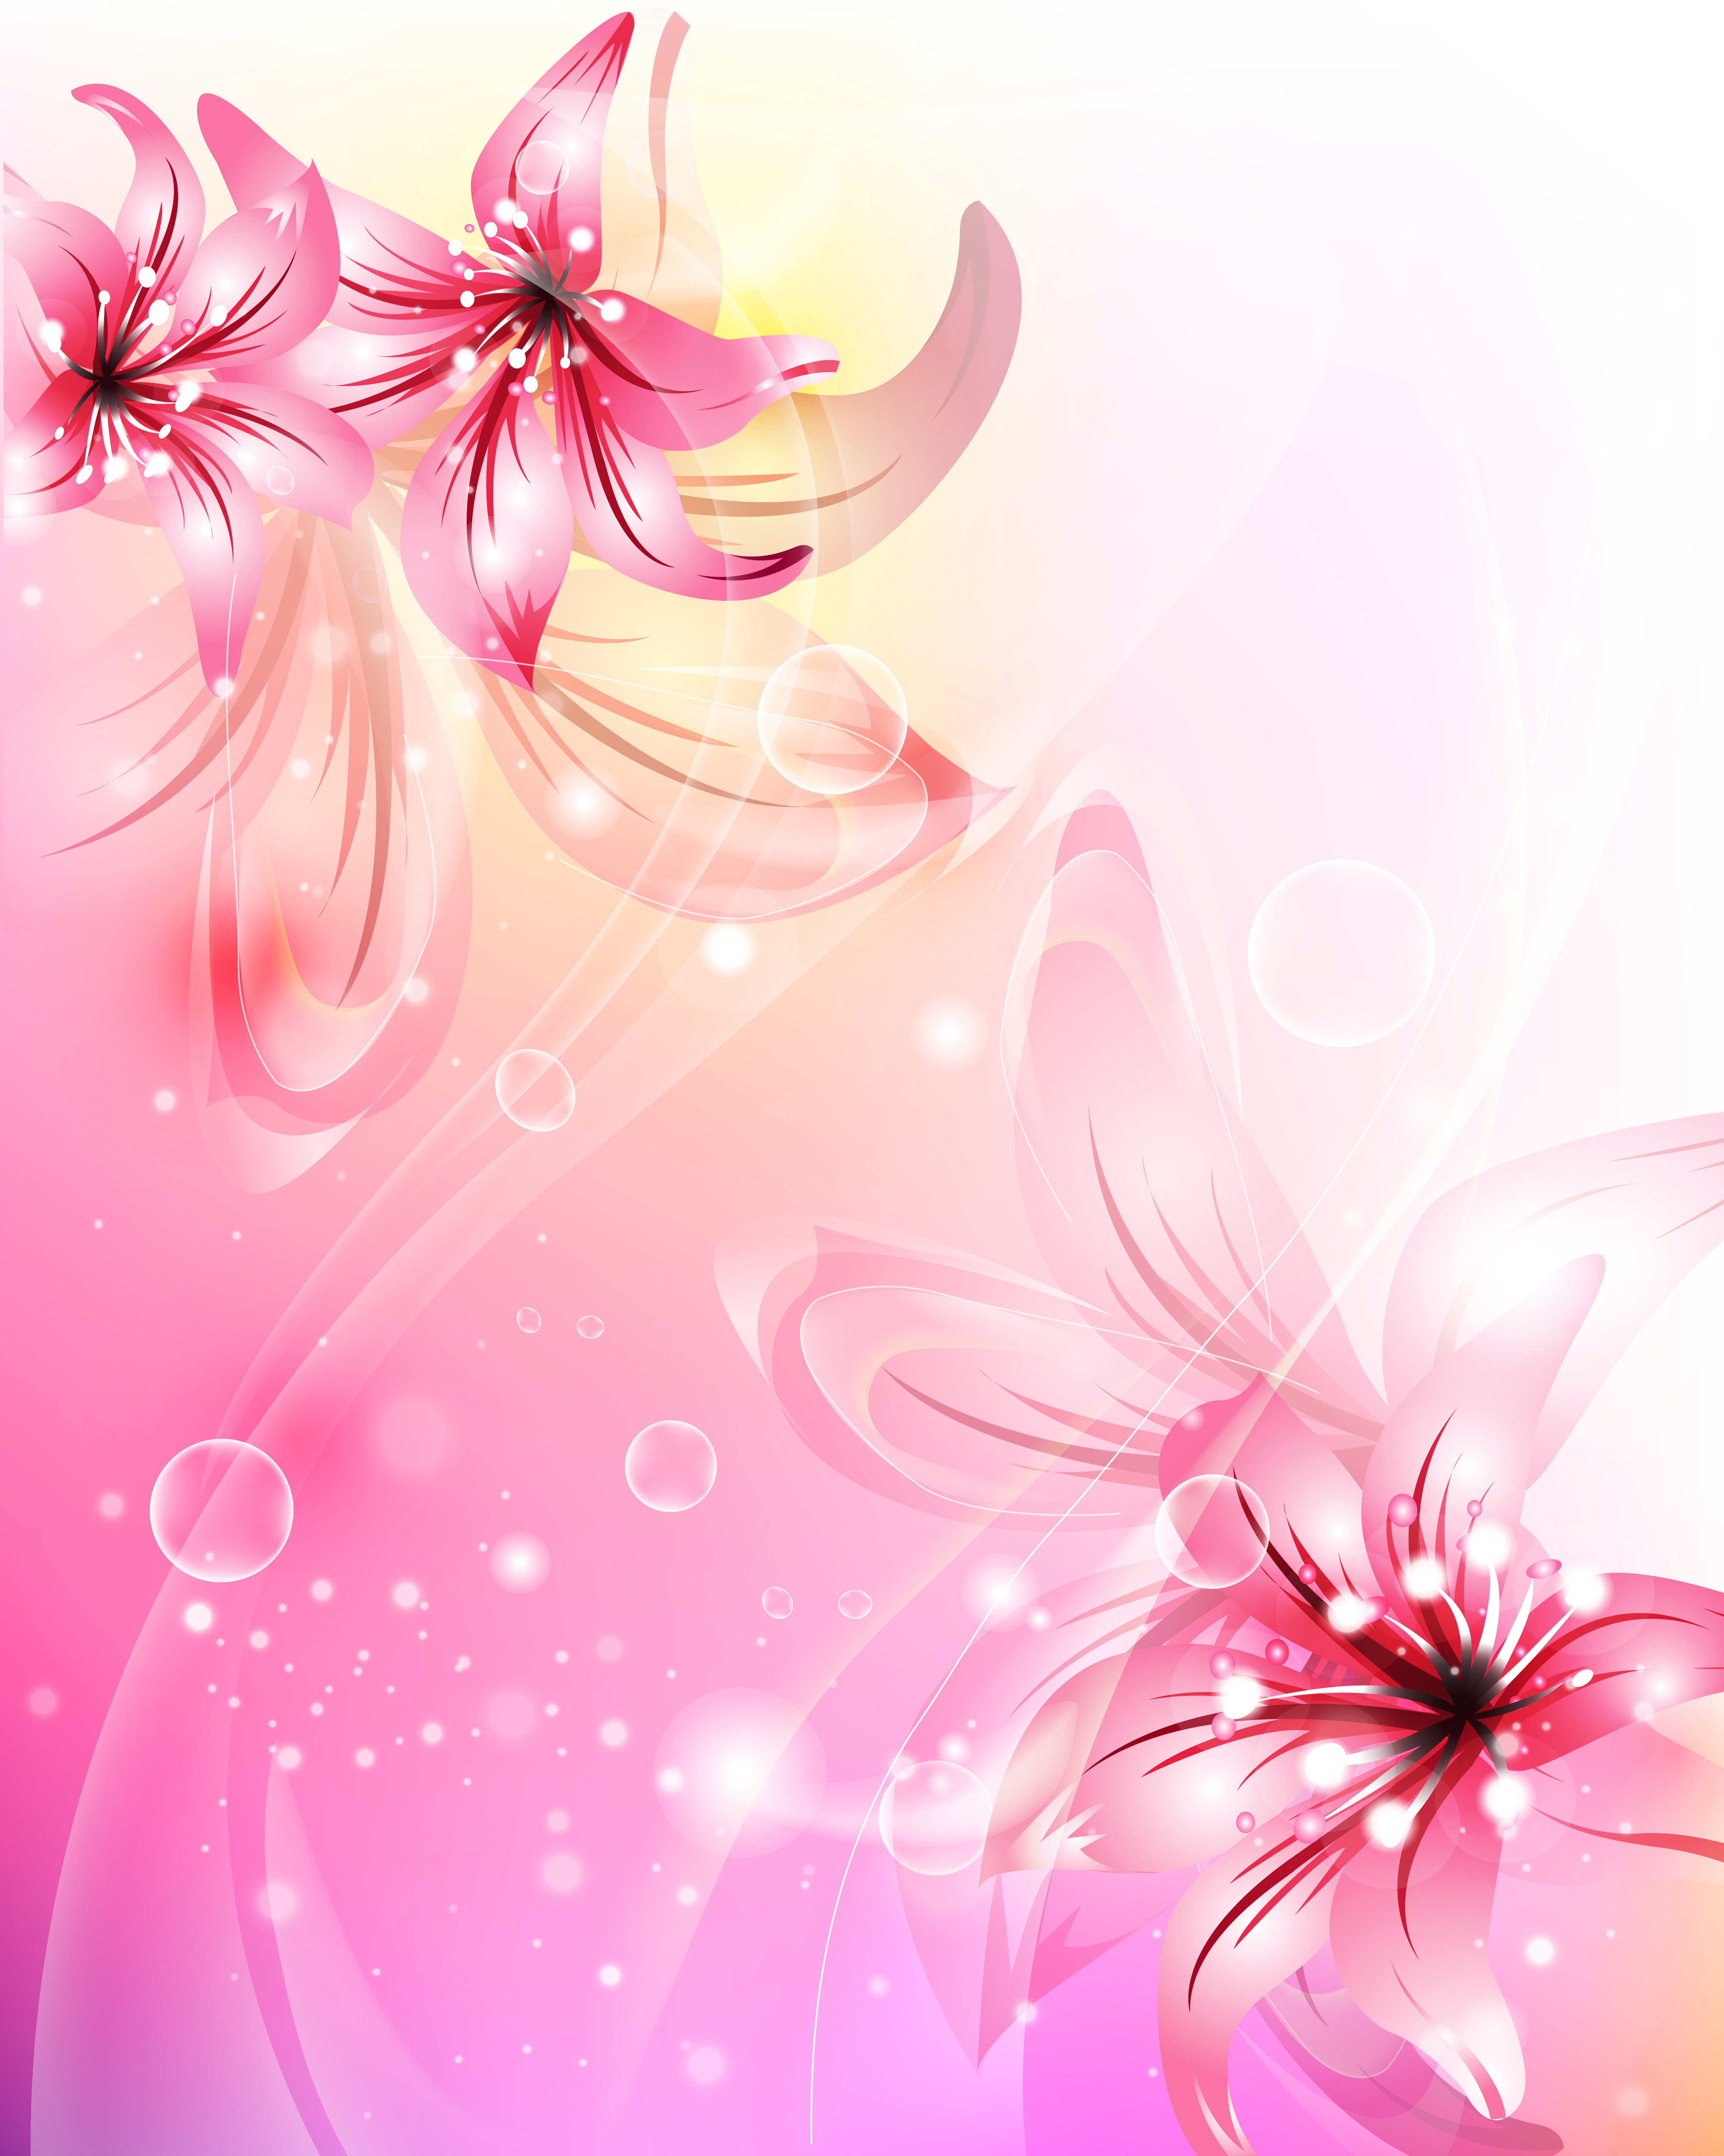 🔥 [73+] Pink Flowers Backgrounds | WallpaperSafari